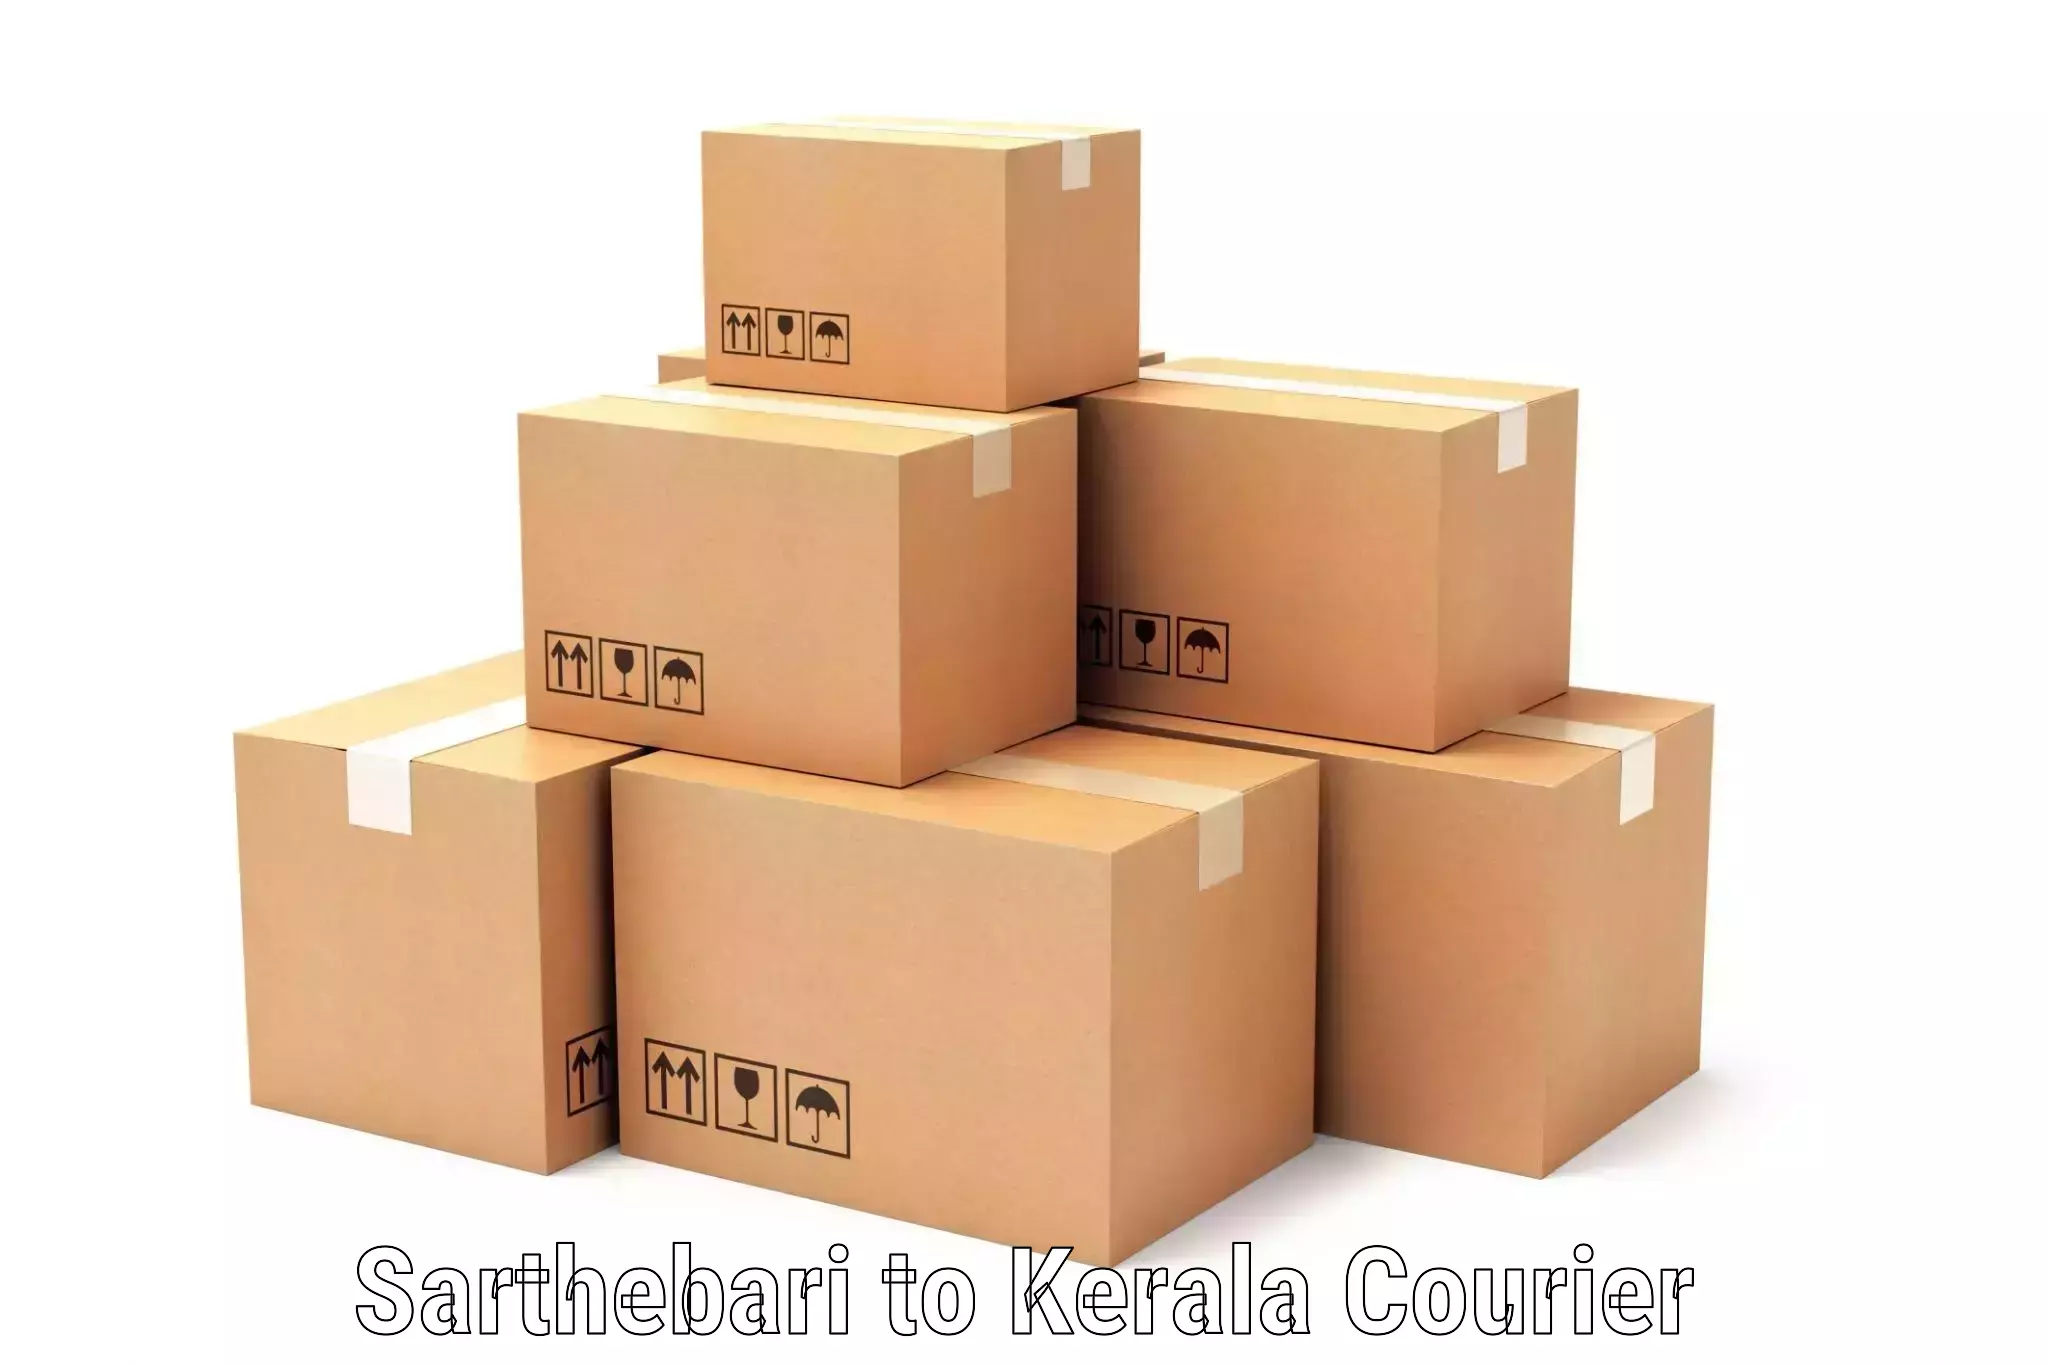 International courier networks Sarthebari to Kerala